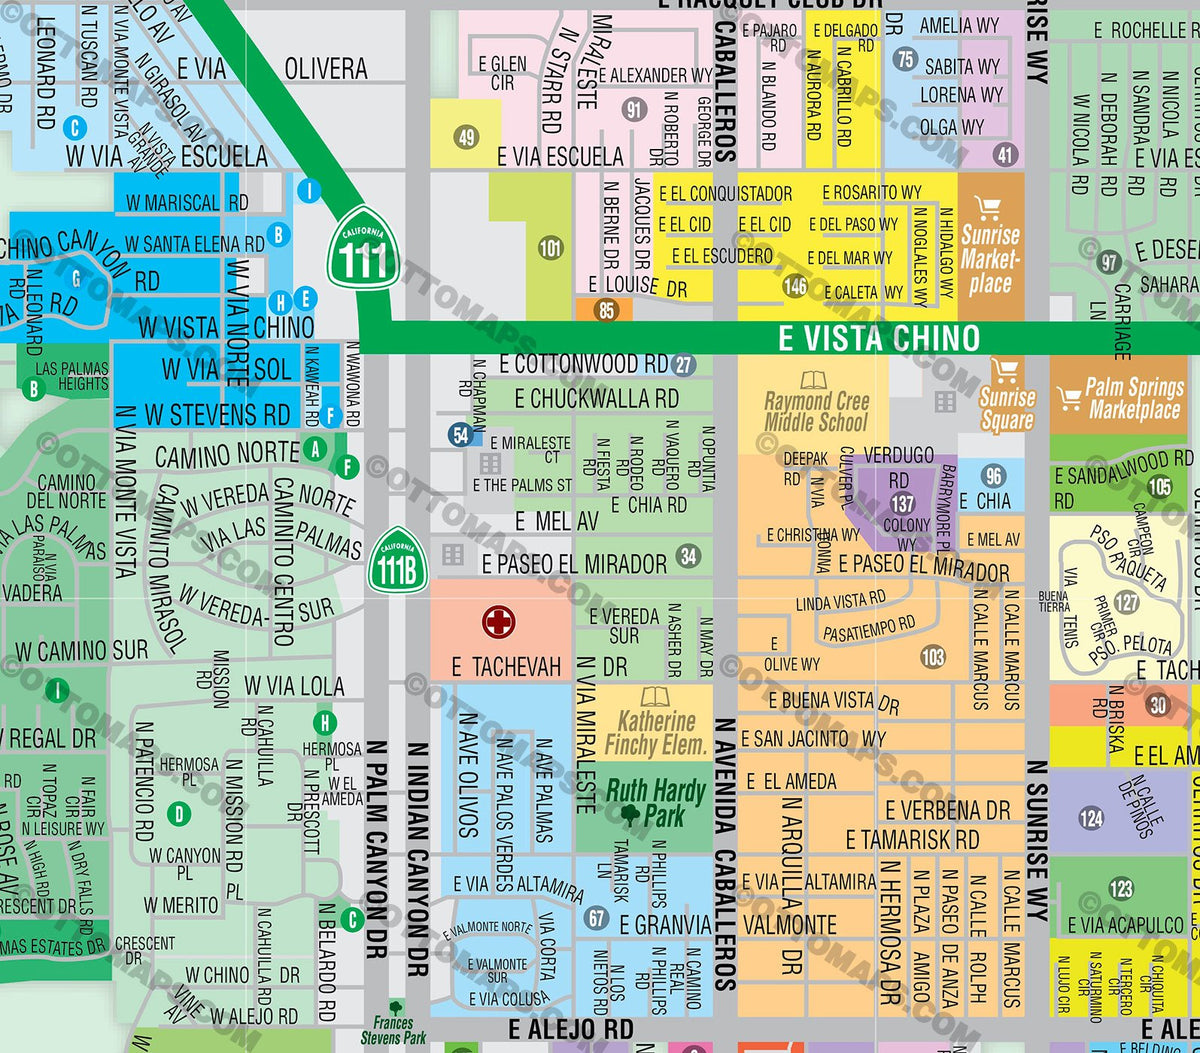 Victoria Gardens  Shopping mall, Map screenshot, Map